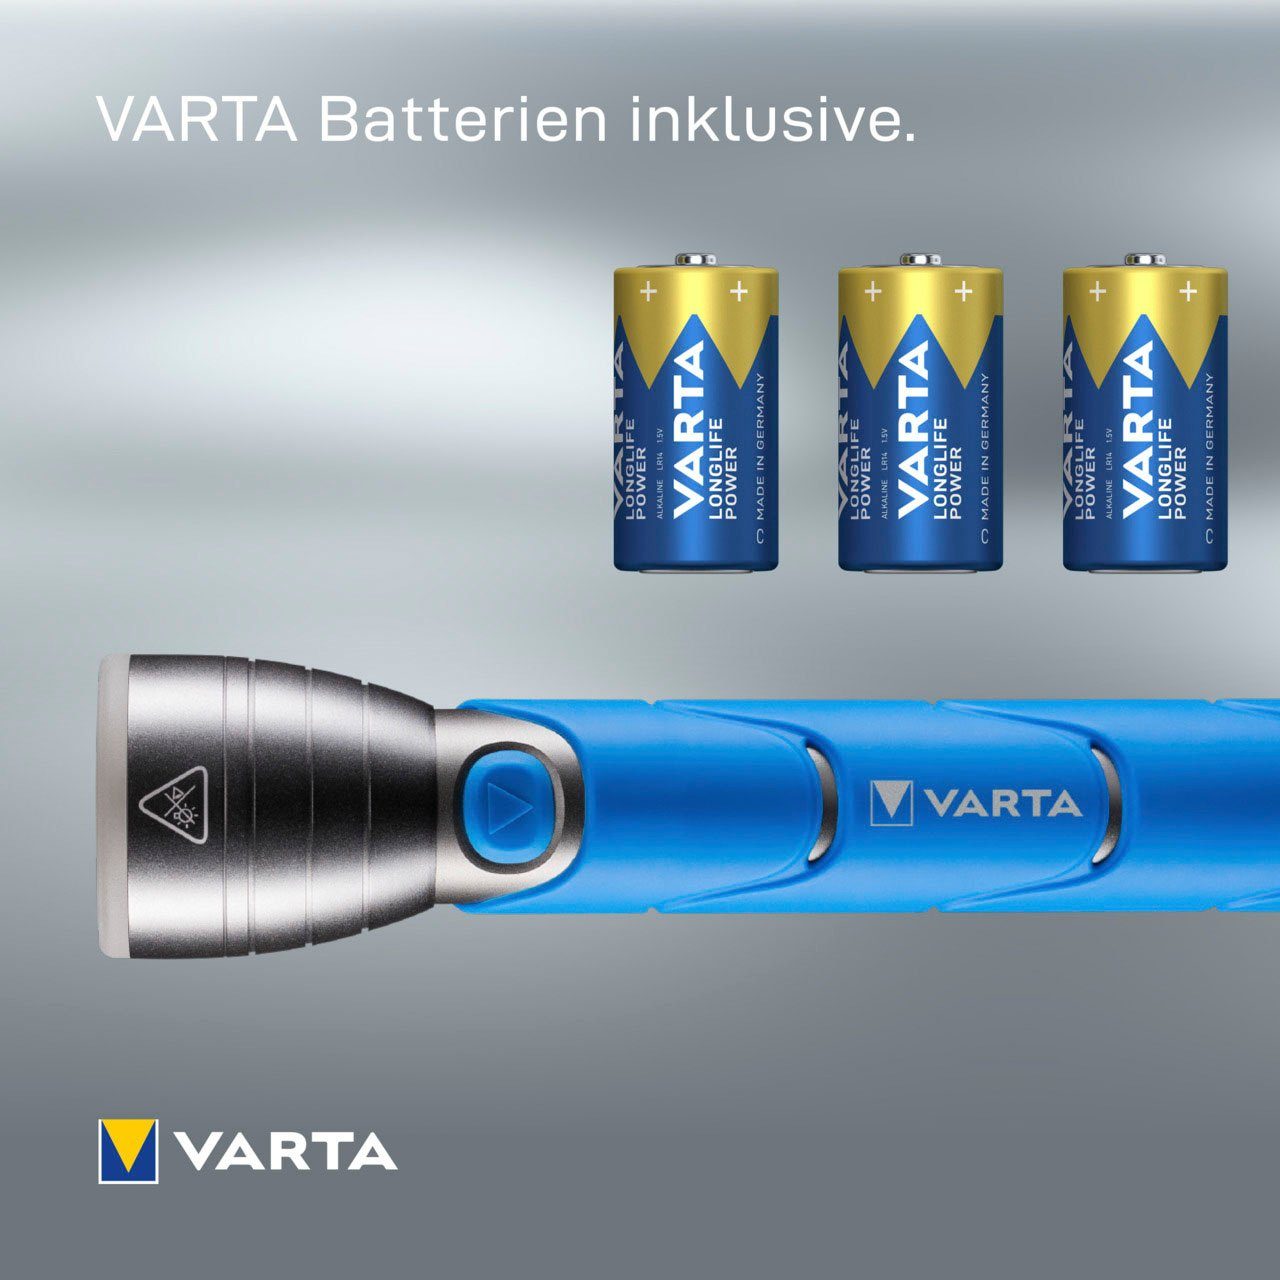 Power inkl. Sports Taschenlampe Outdoor VARTA F30 C Batterien LONGLIFE 3x Taschenlampe